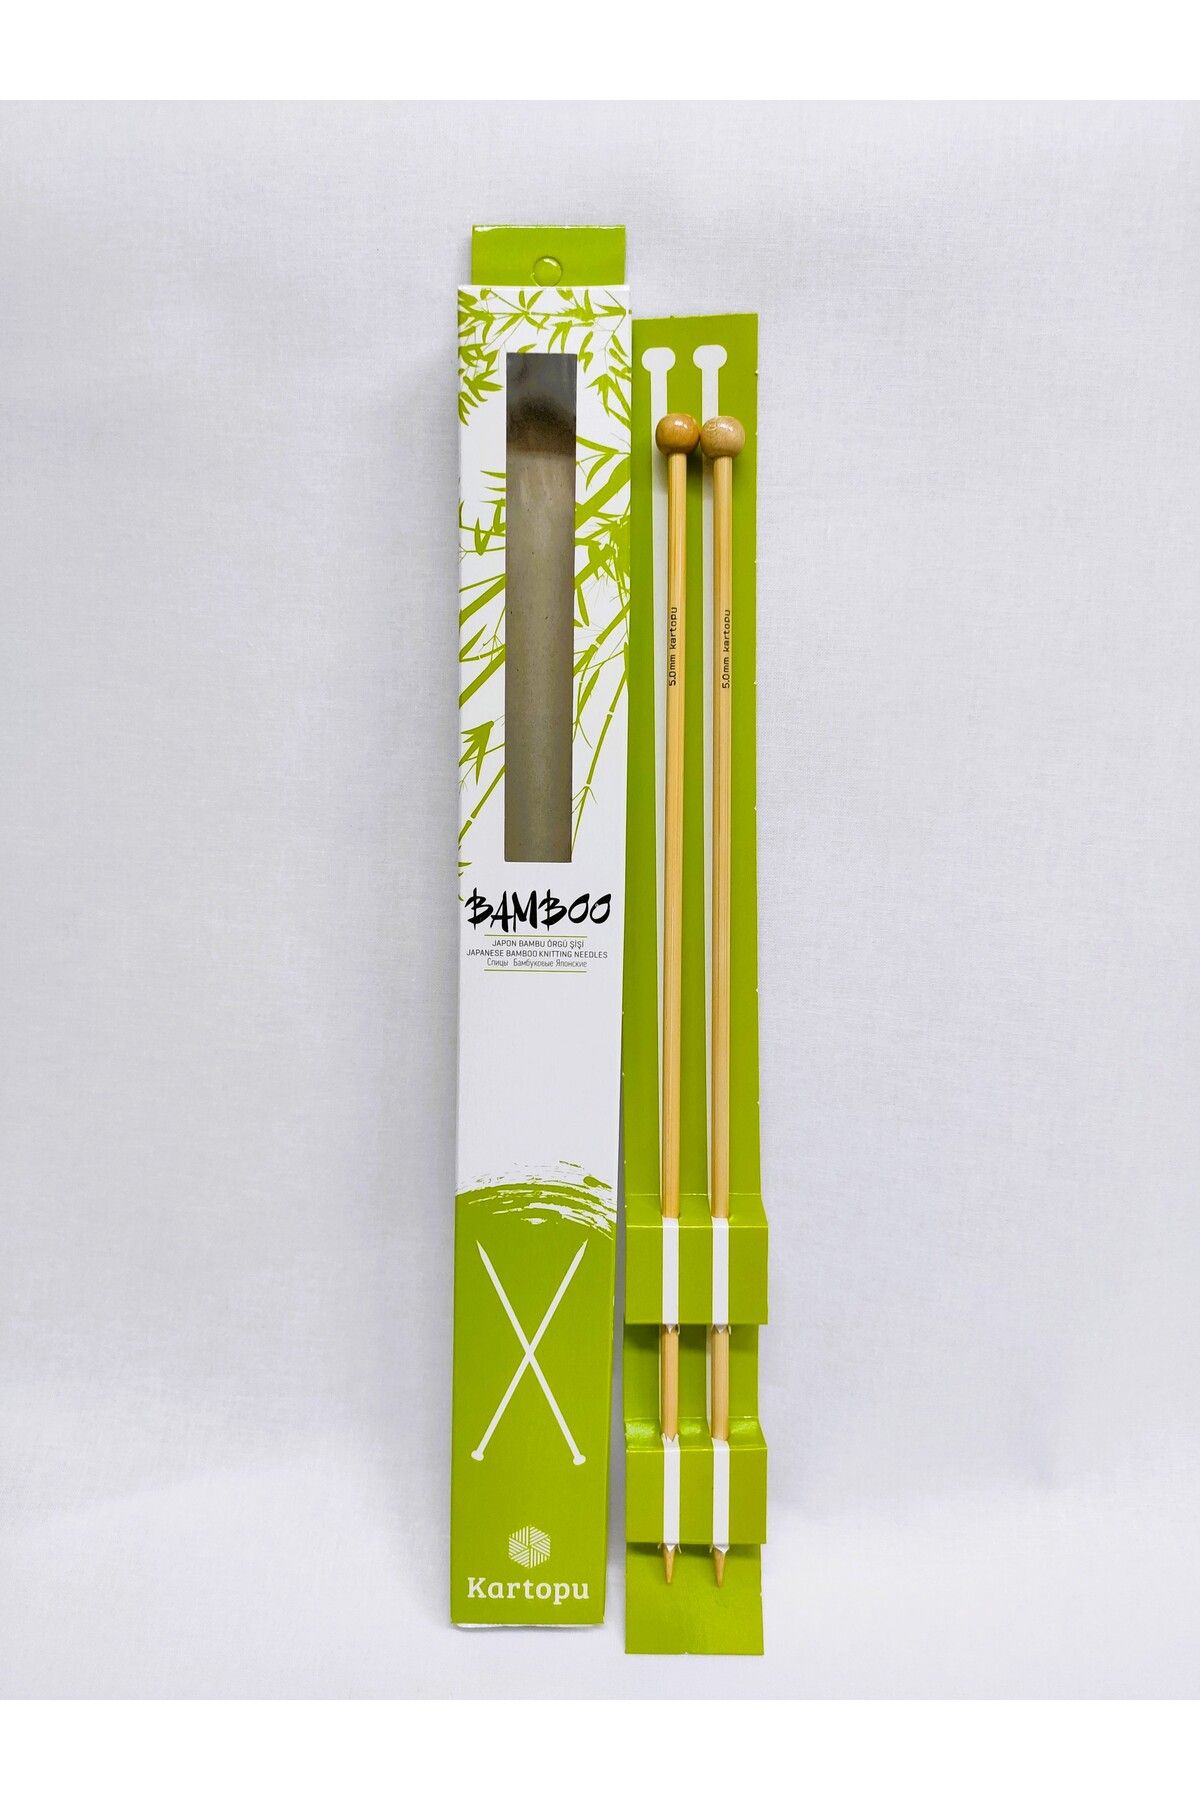 ATMACA TUHAFİYE Kartopu Japon Bambu Şiş 5 Numara Bamboo Ahşap Örgü Şişi